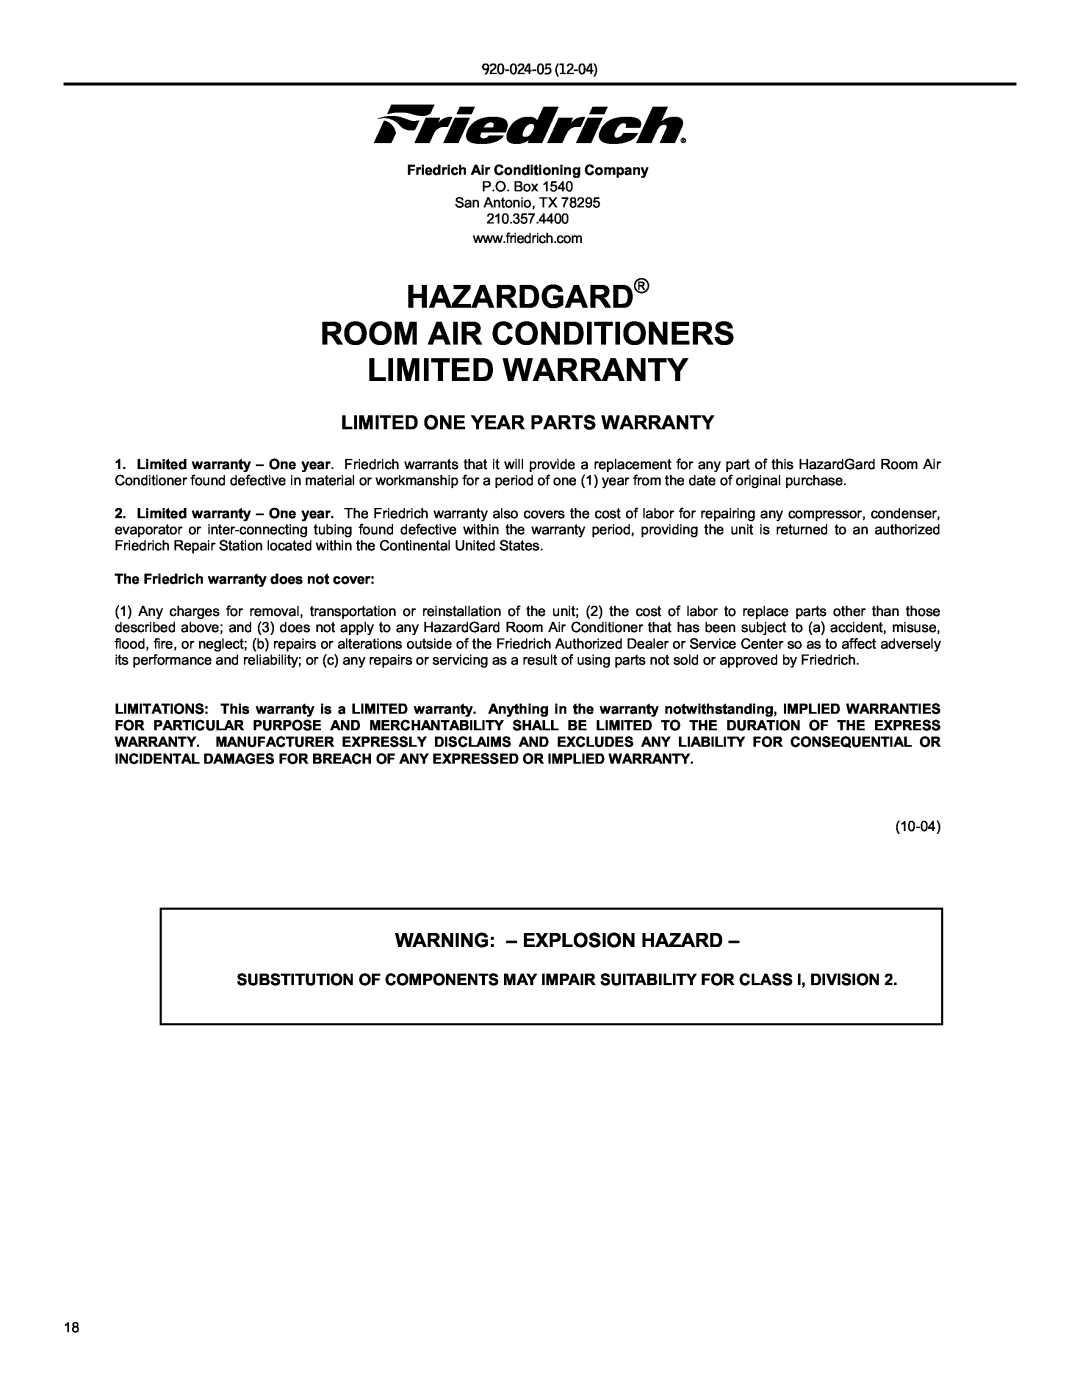 Friedrich SH15, SH20 Hazardgard Room Air Conditioners Limited Warranty, Limited One Year Parts Warranty, 920-024-05 